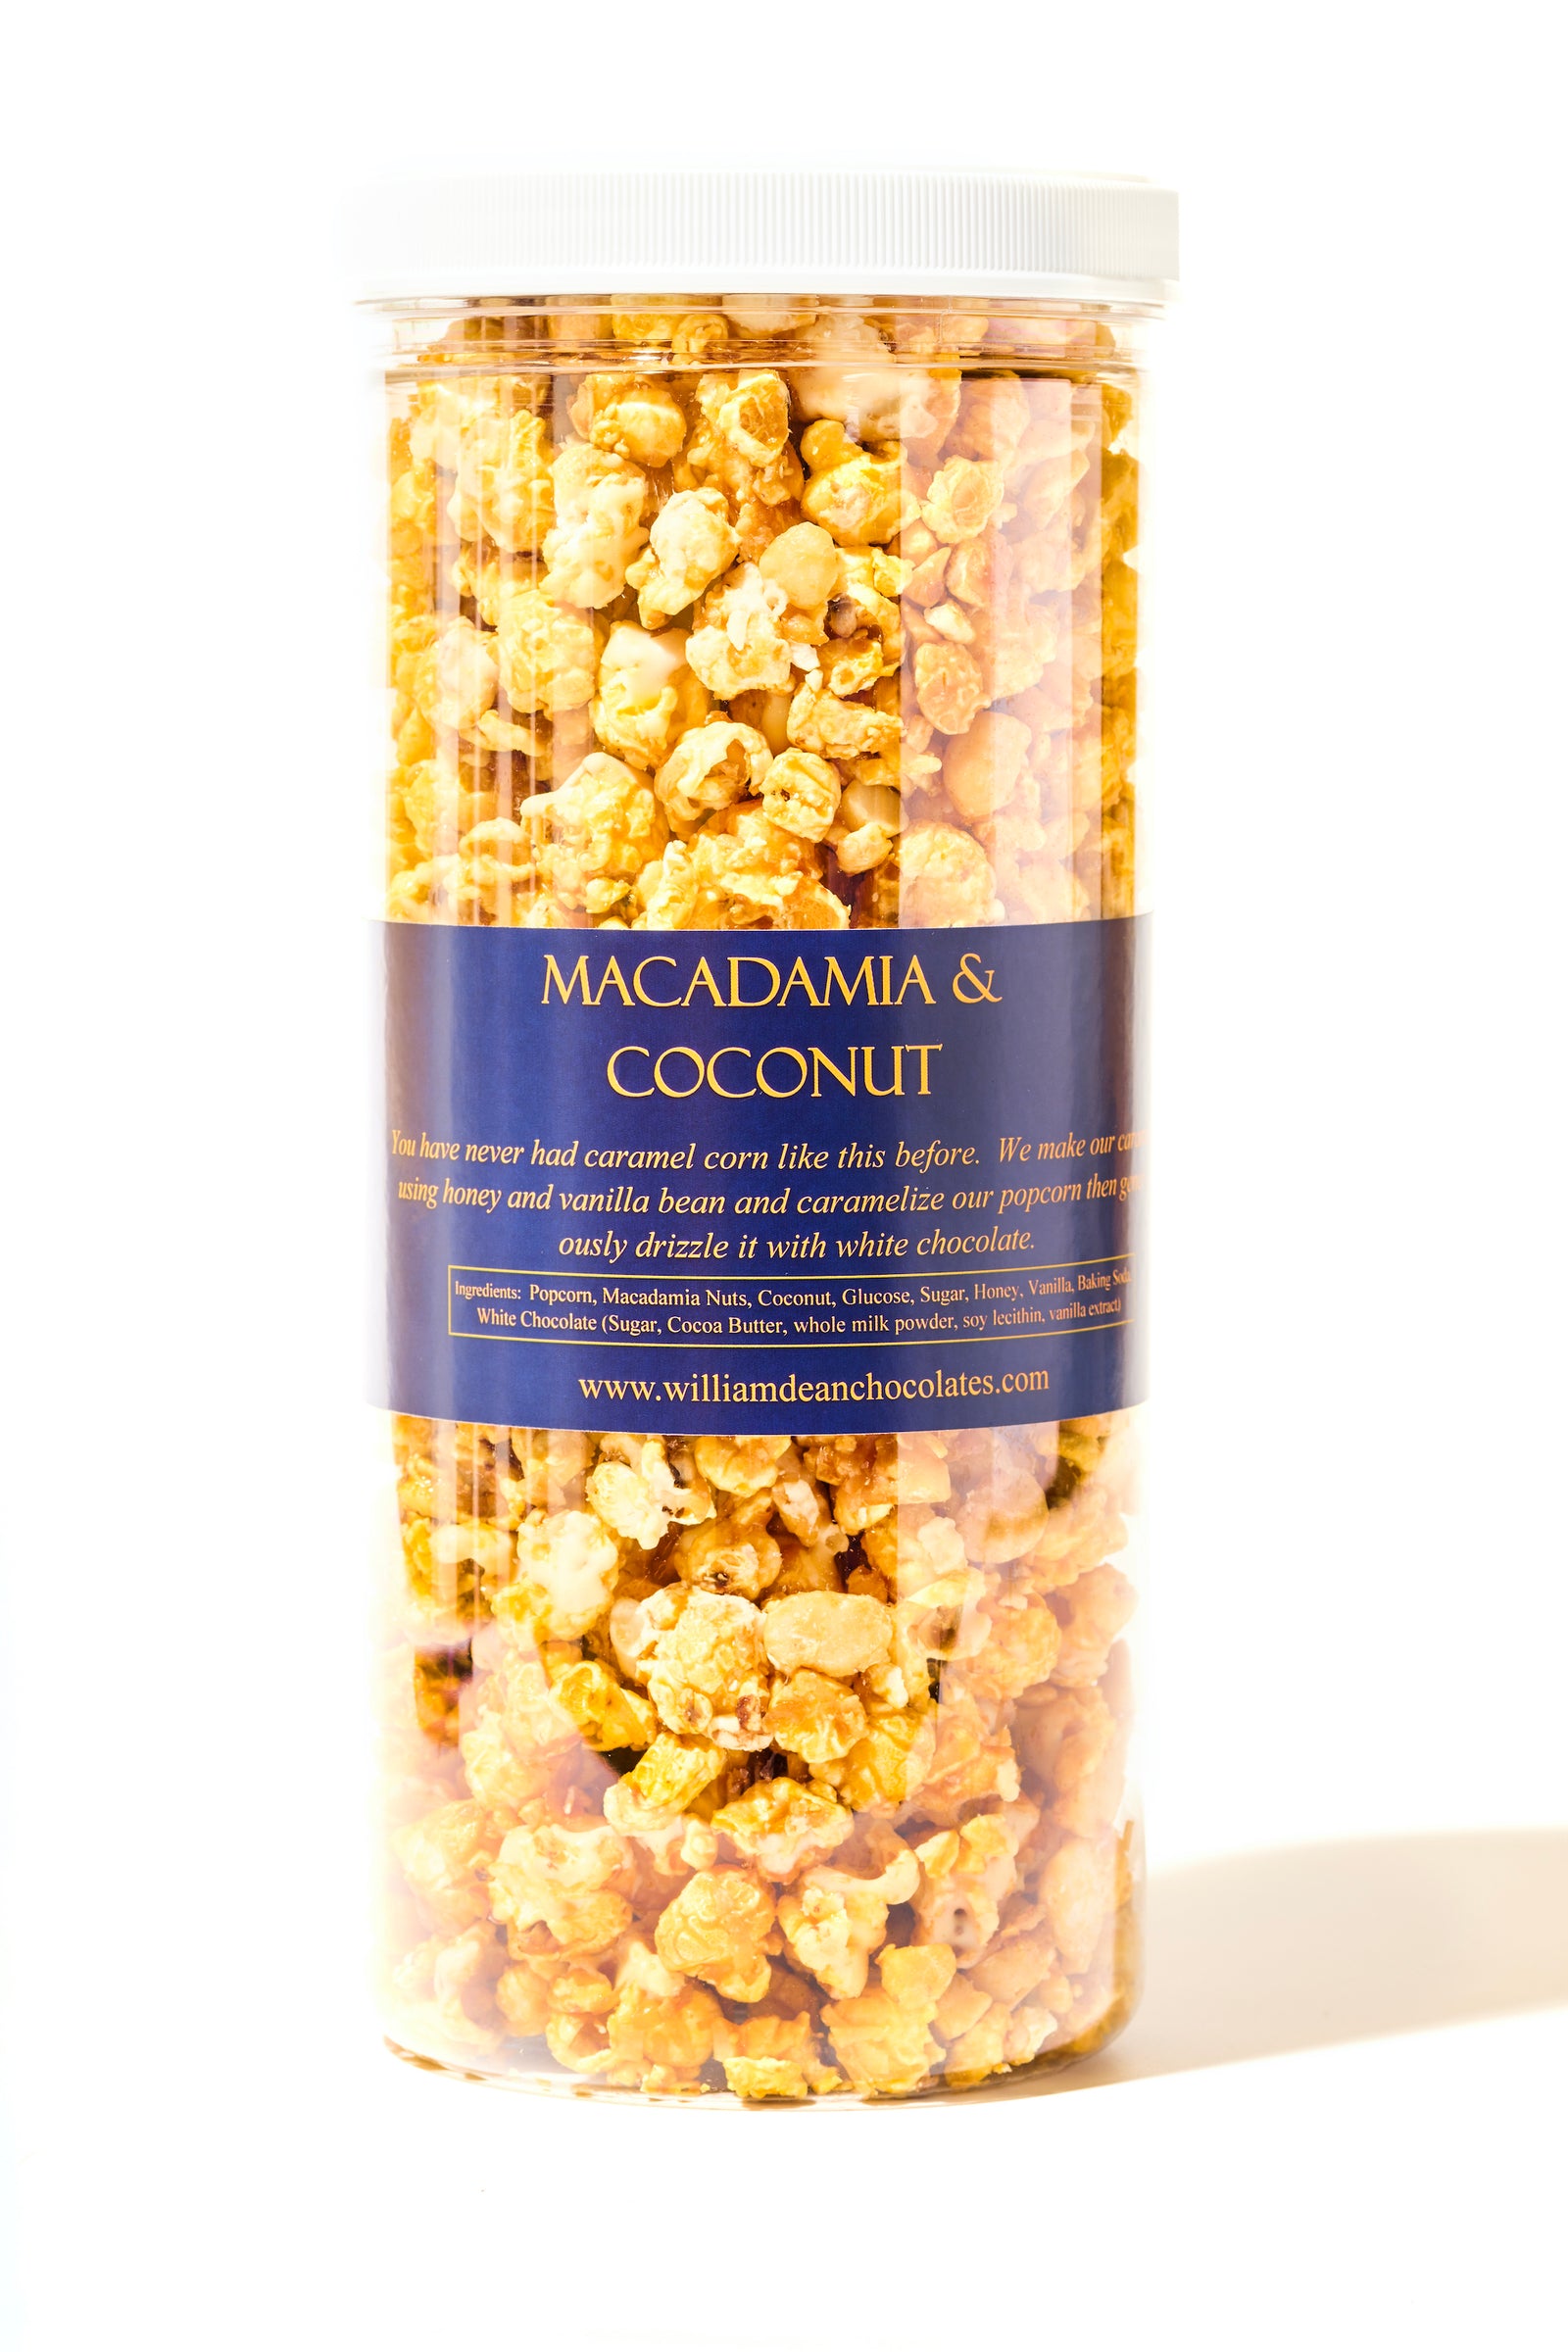 Macadamia & Coconut Caramel Corn with White Chocolate